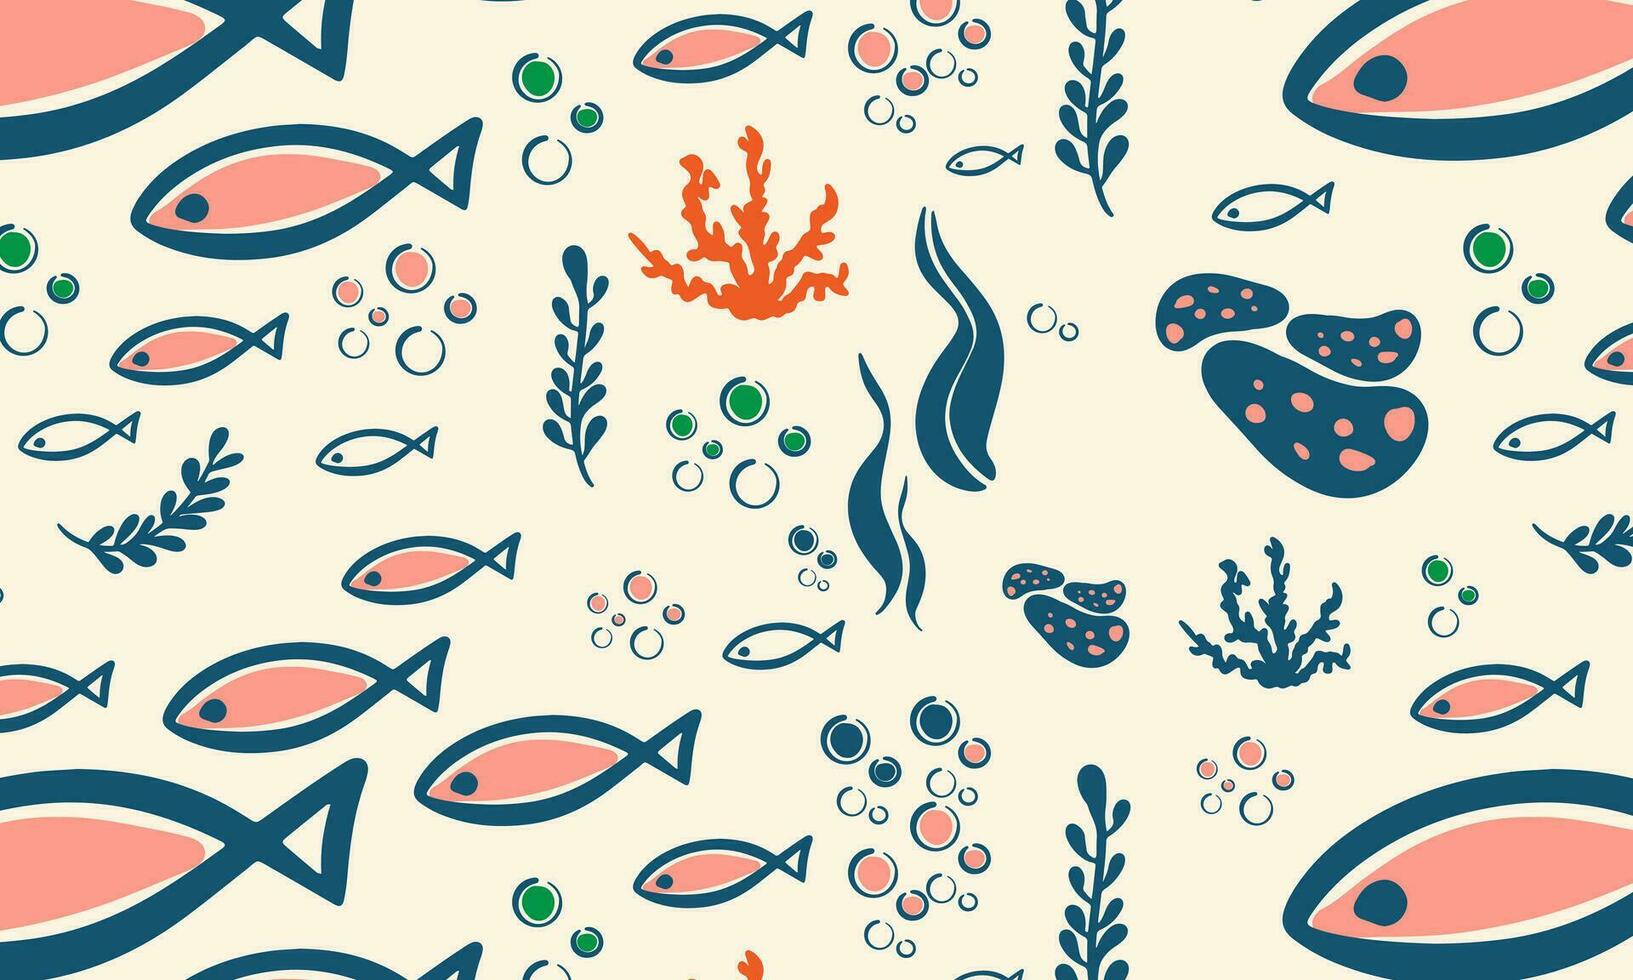 marine elements of the underwater world, shells, corals, fish, algae, bubbles, vector illustration in flat style, minimalism